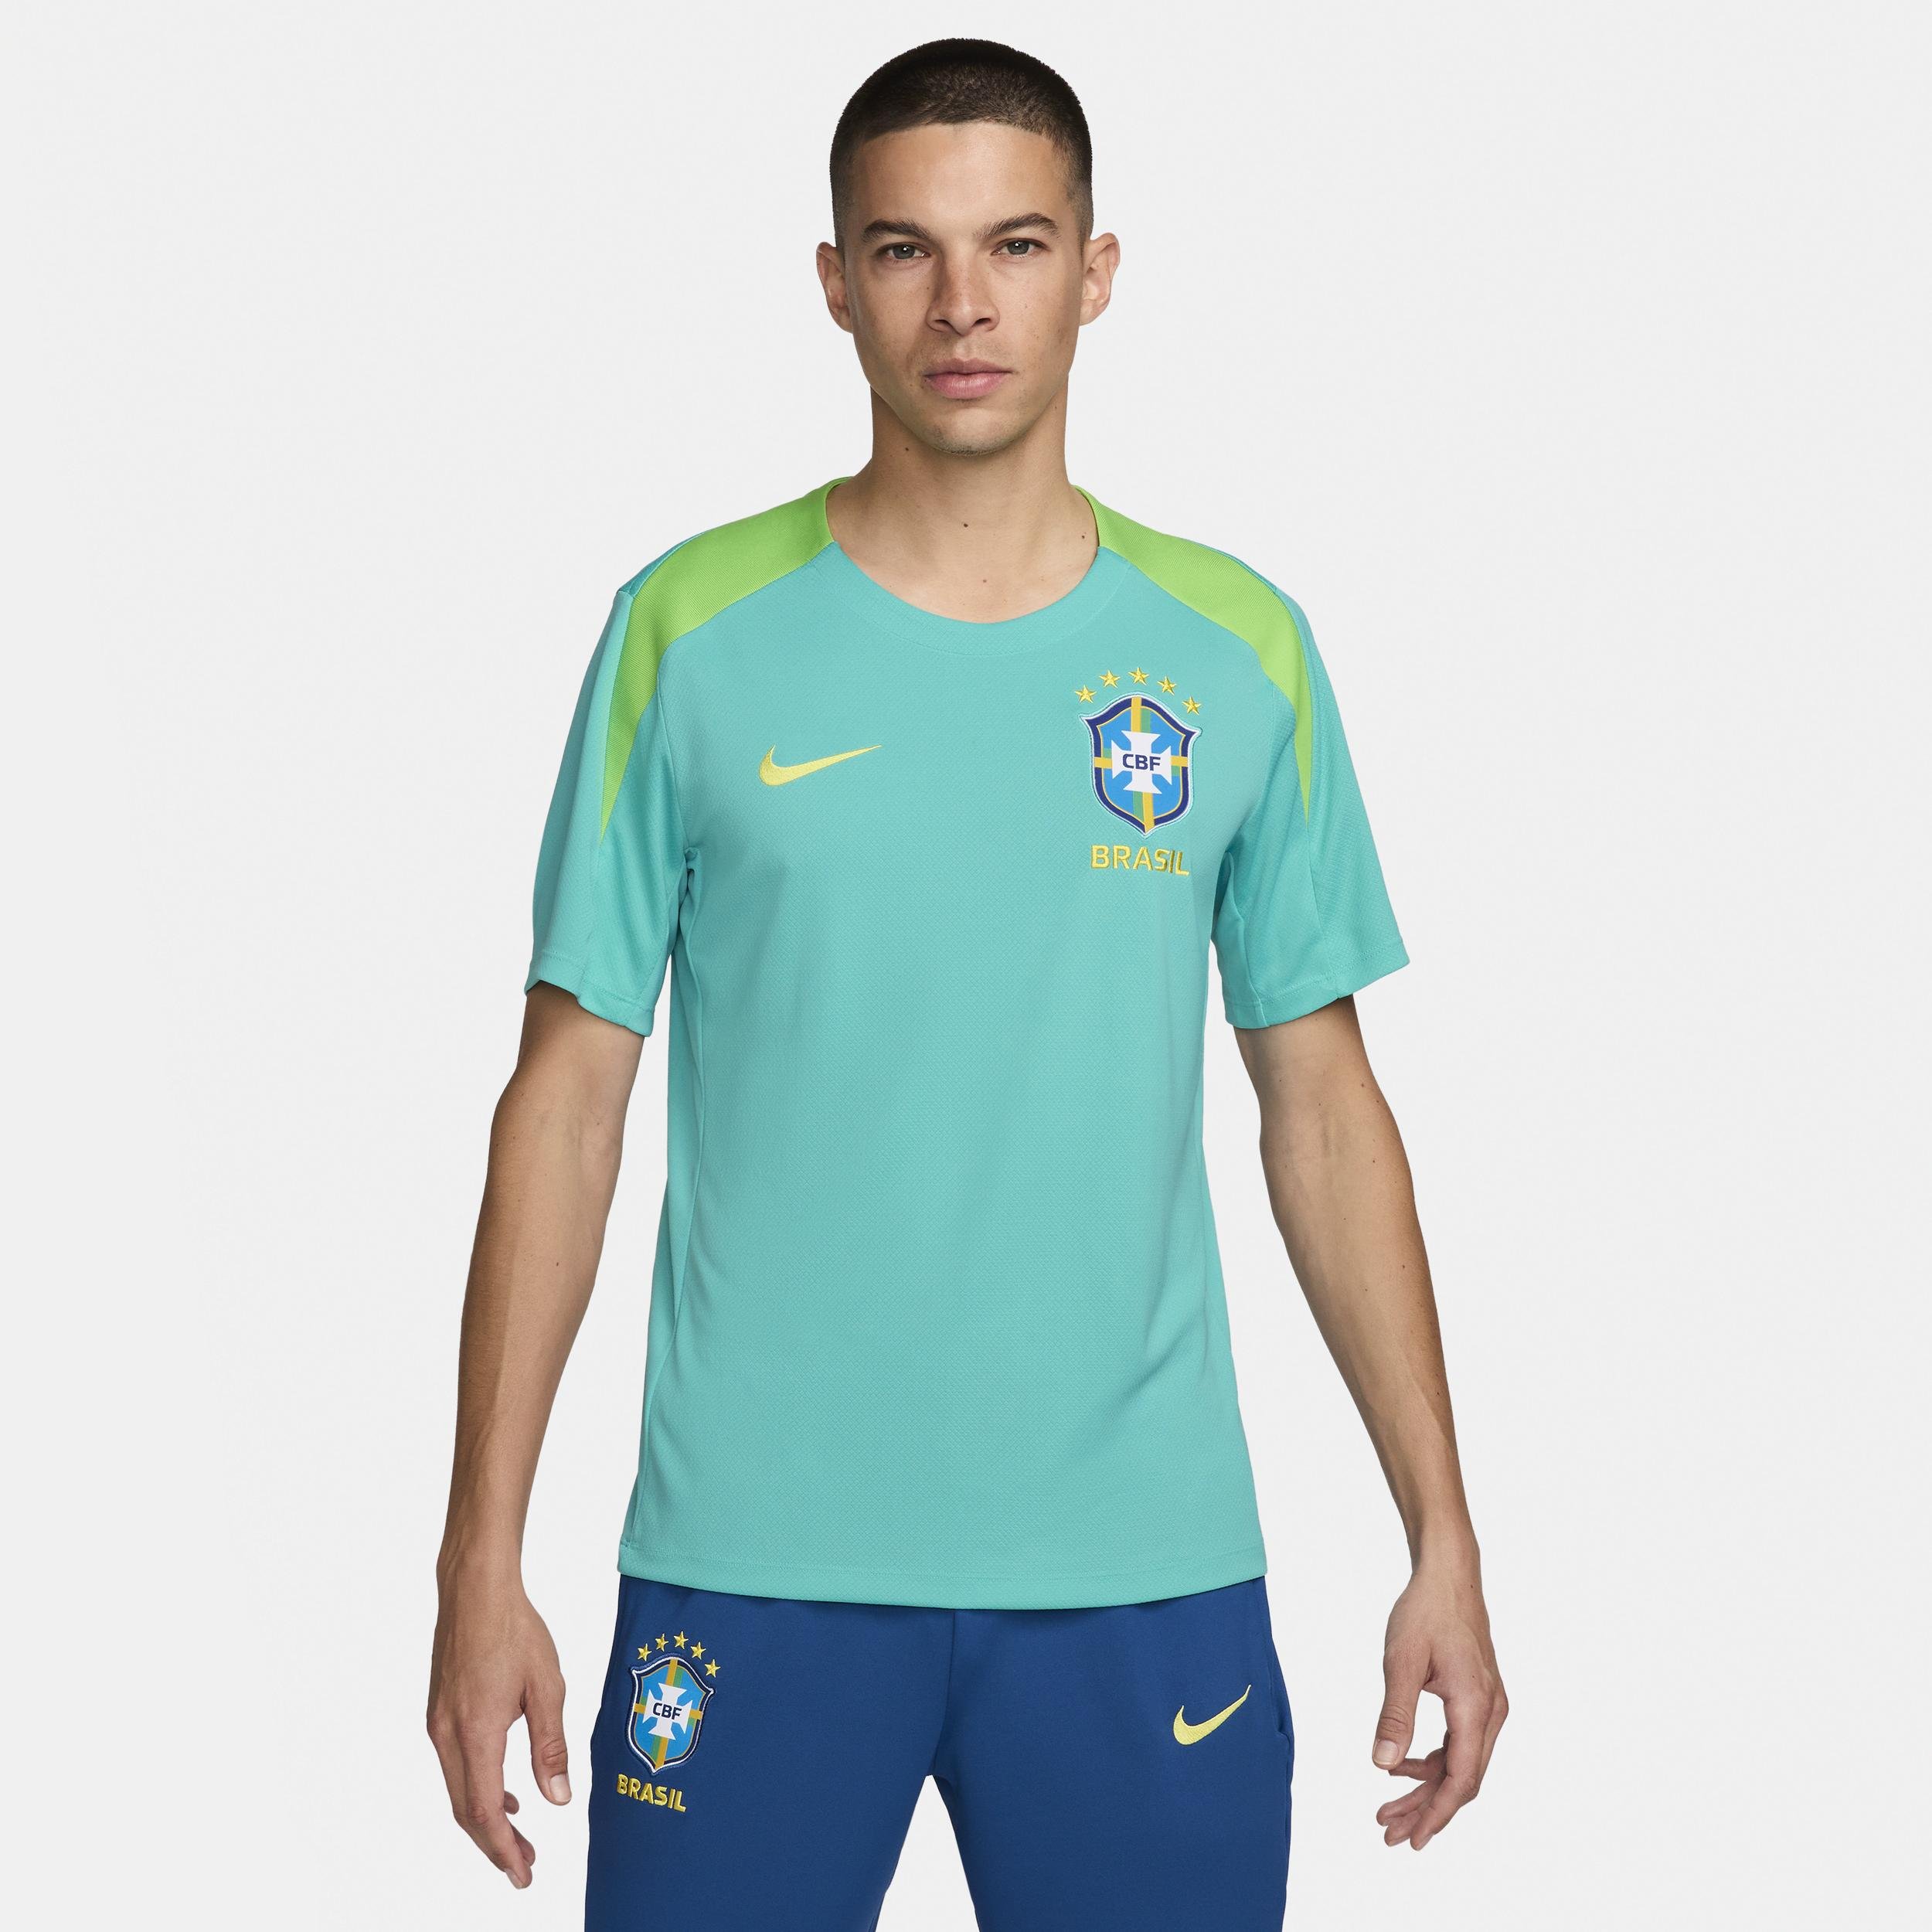 Brazil Strike Nike Men's Dri-FIT Soccer Short-Sleeve Knit Top by NIKE